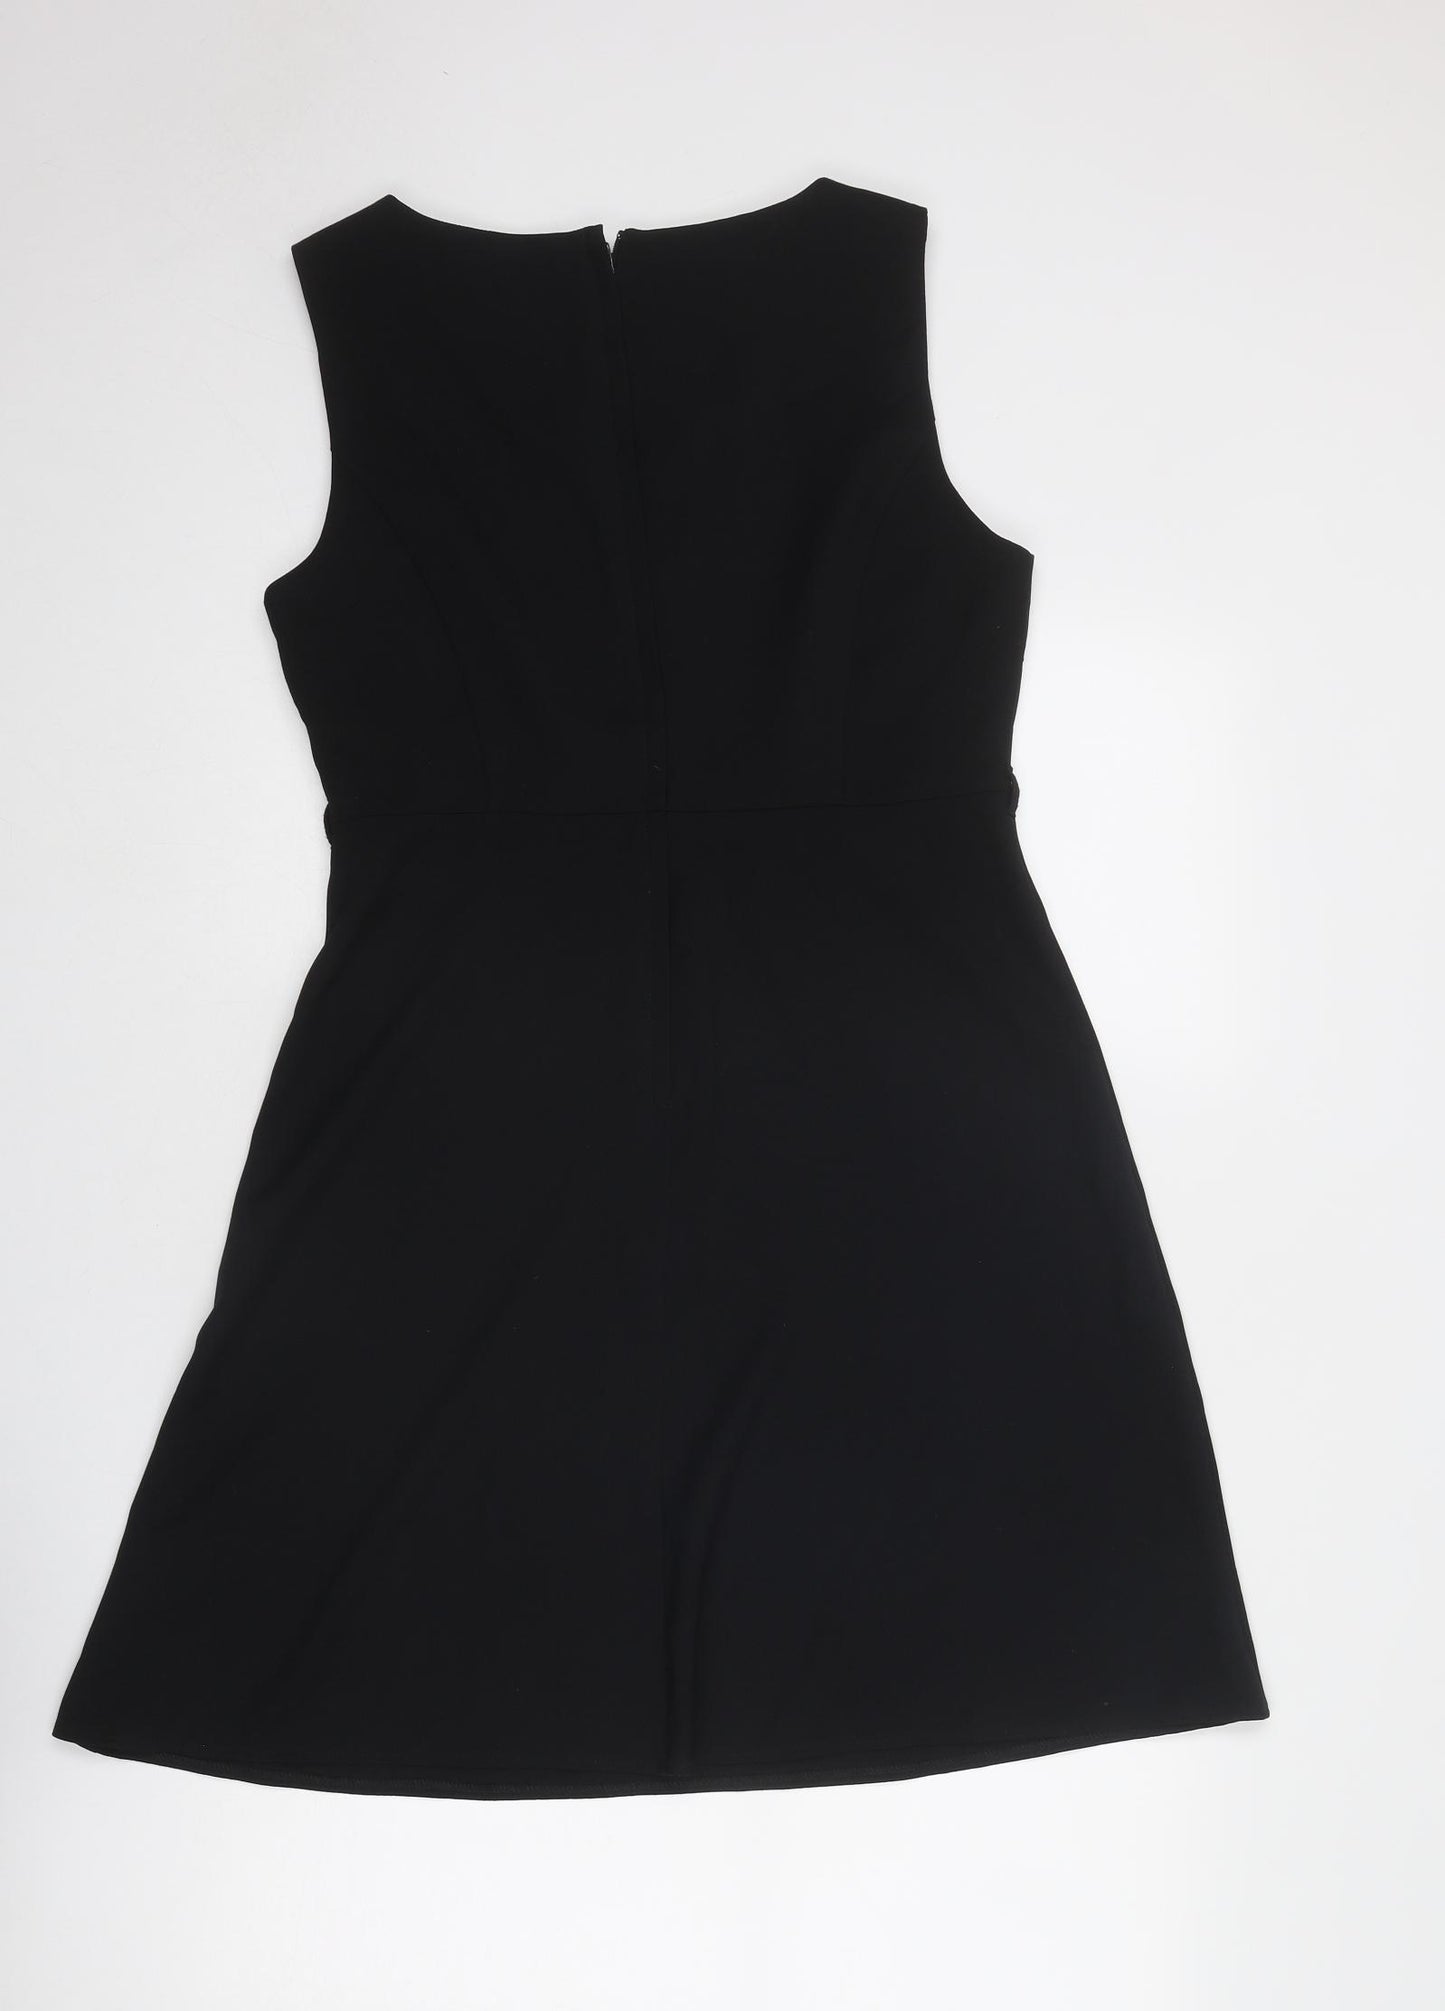 Dorothy Perkins Womens Black Polyester Shift Size 12 V-Neck Zip